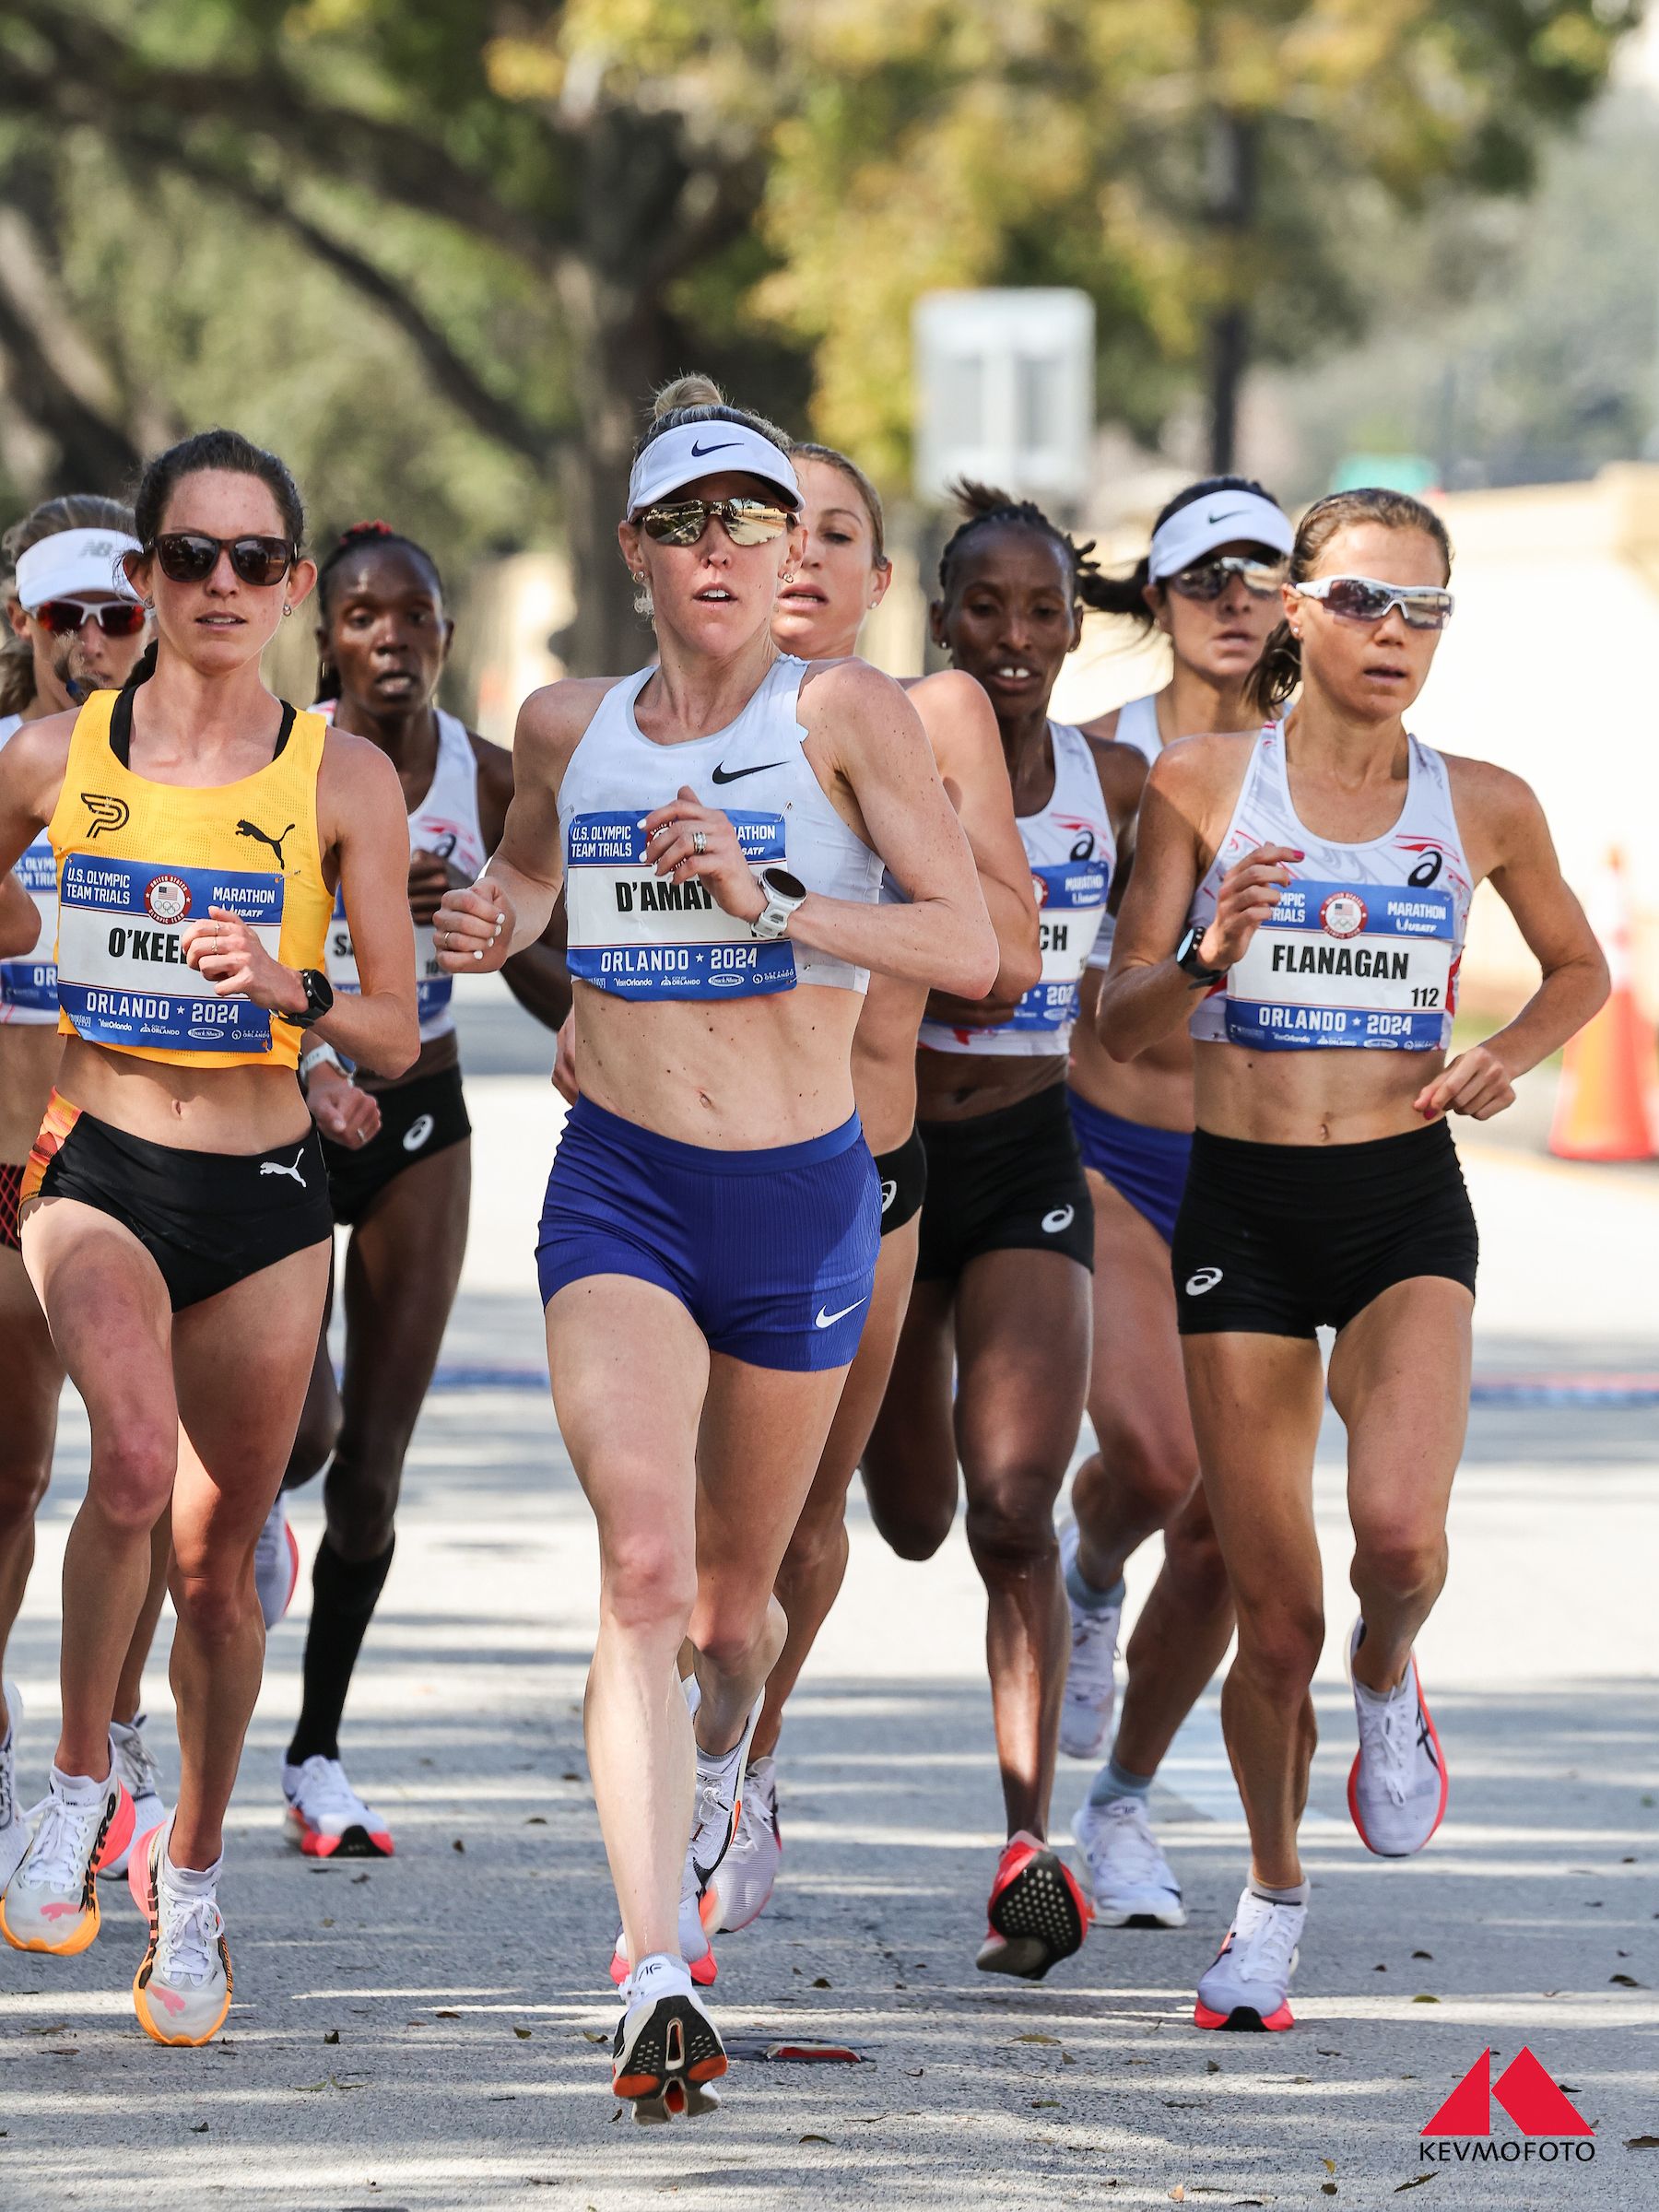 Runner's World' Grows Membership Program, Highlights Initial